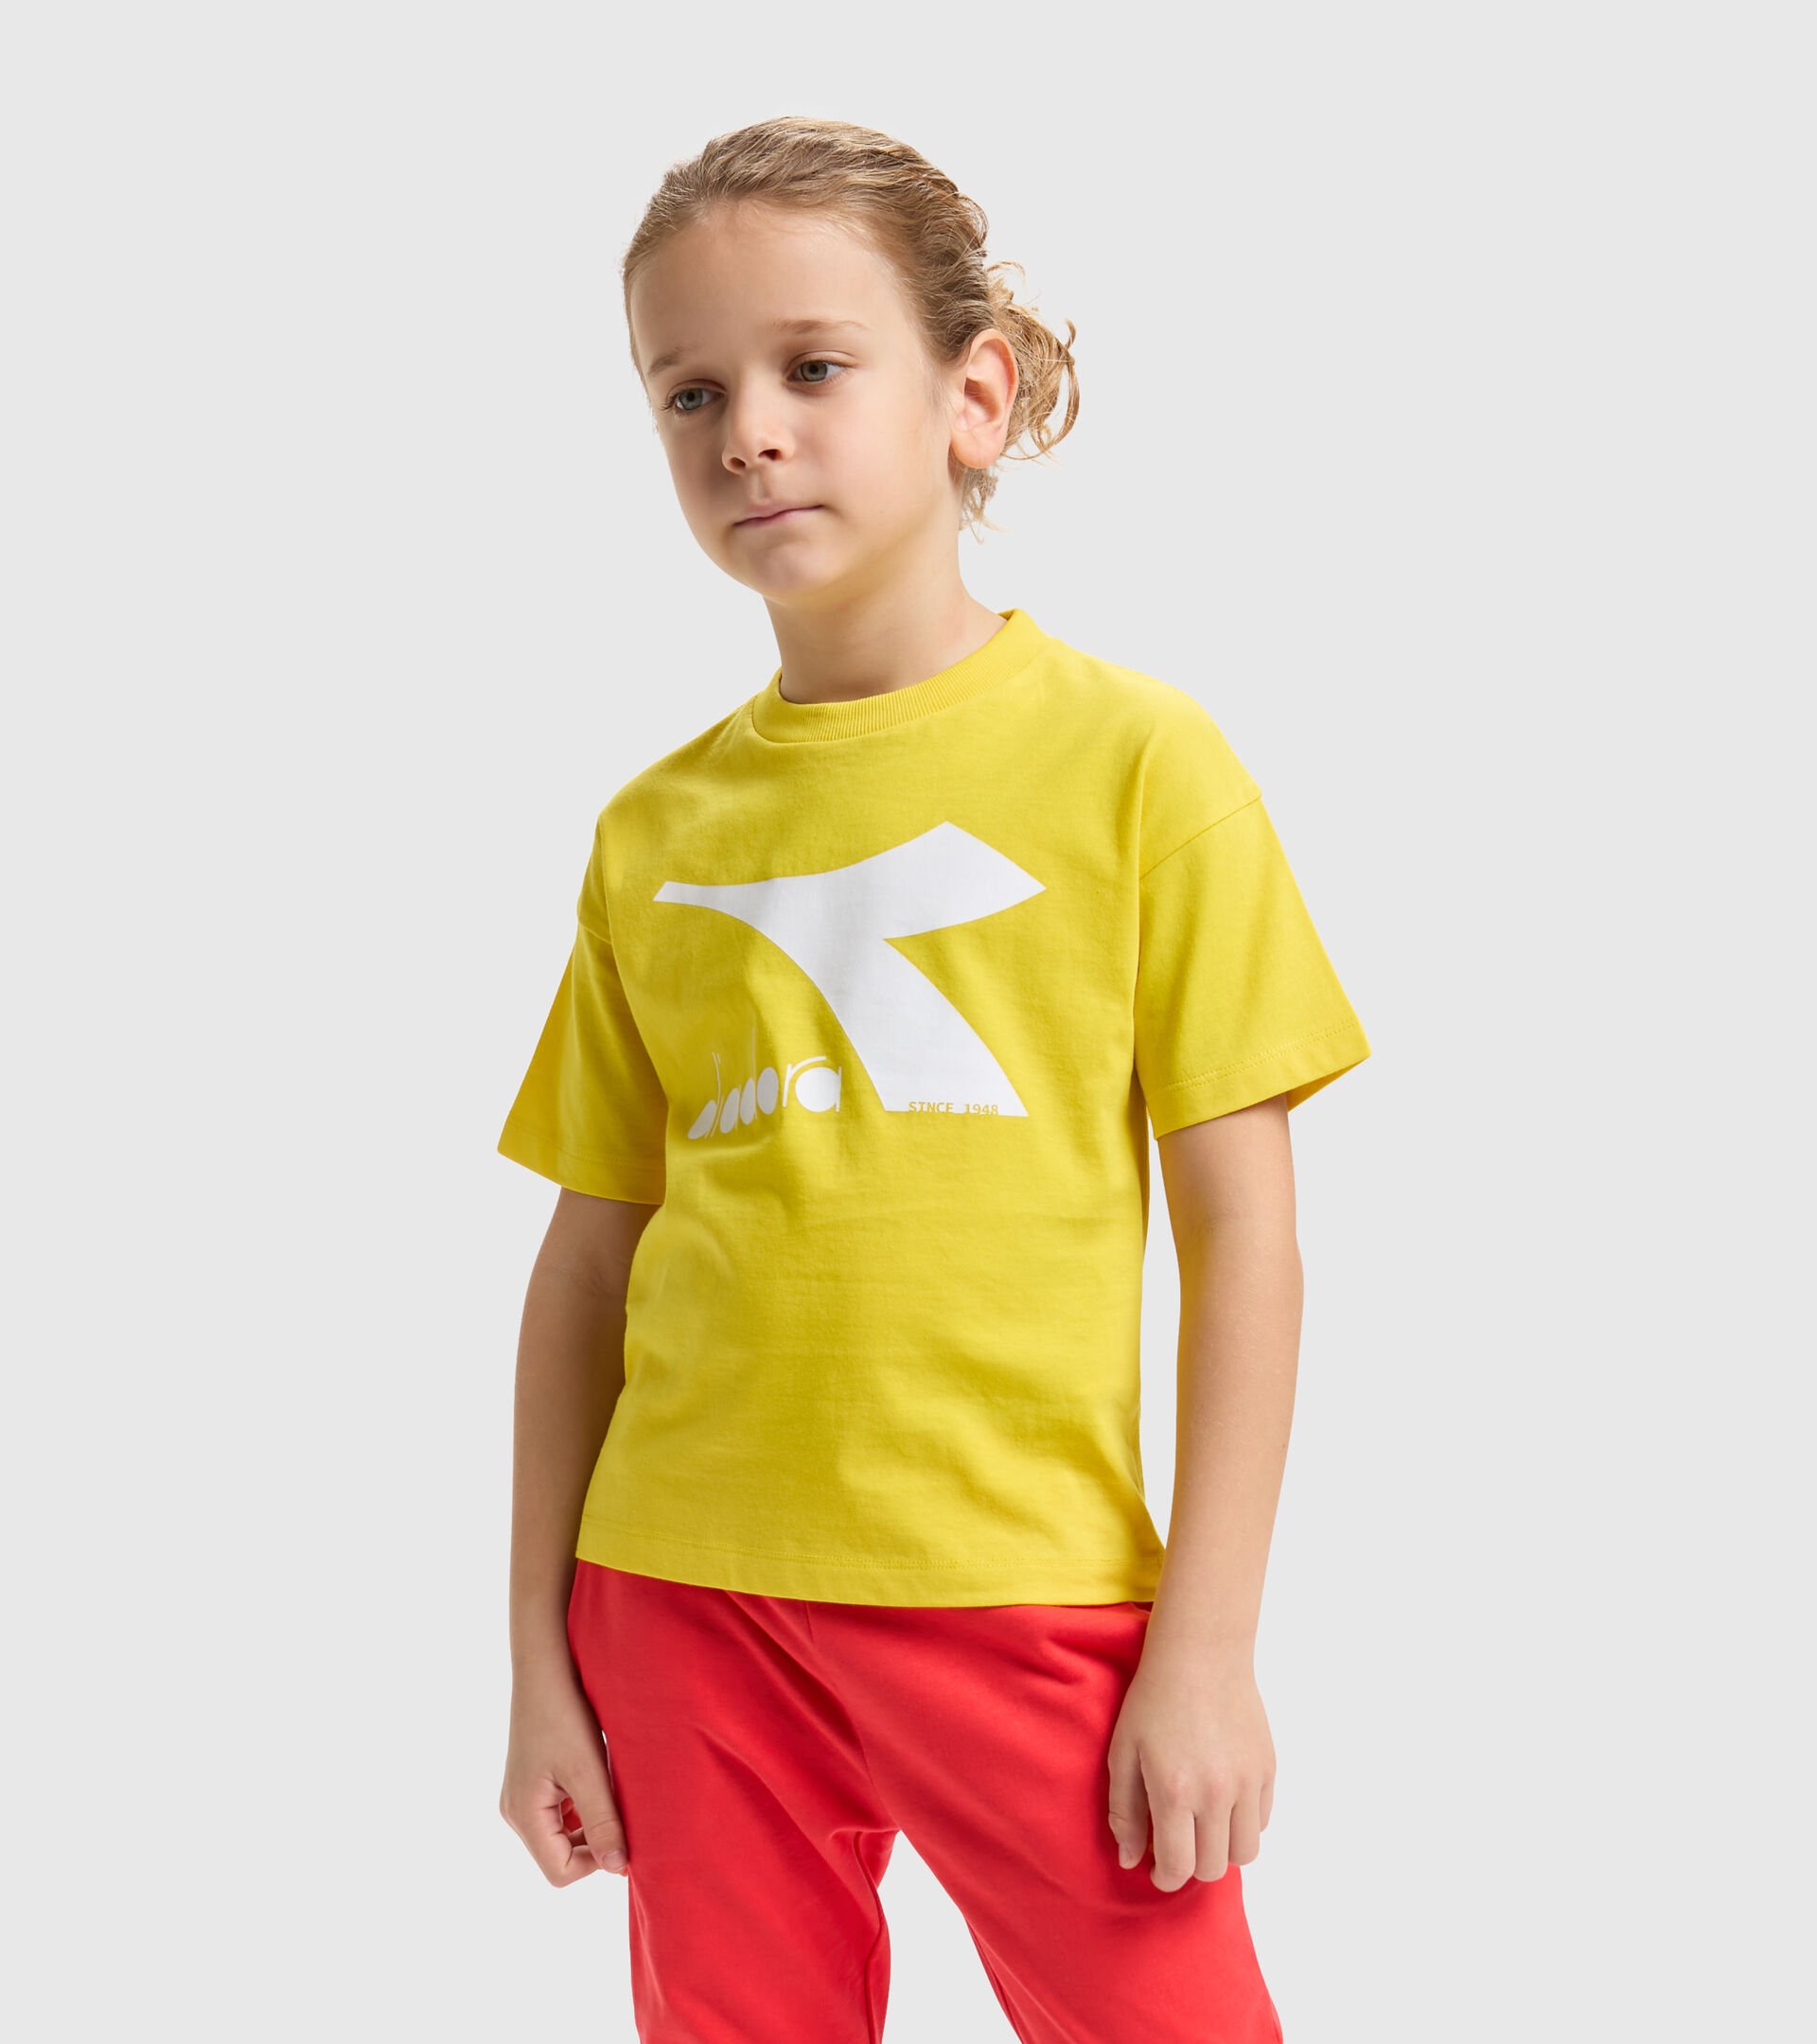 Camiseta de algodón juvenil - Unisex JU.T-SHIRT SS BL RAINBOW LENTE AMARILLA - Diadora